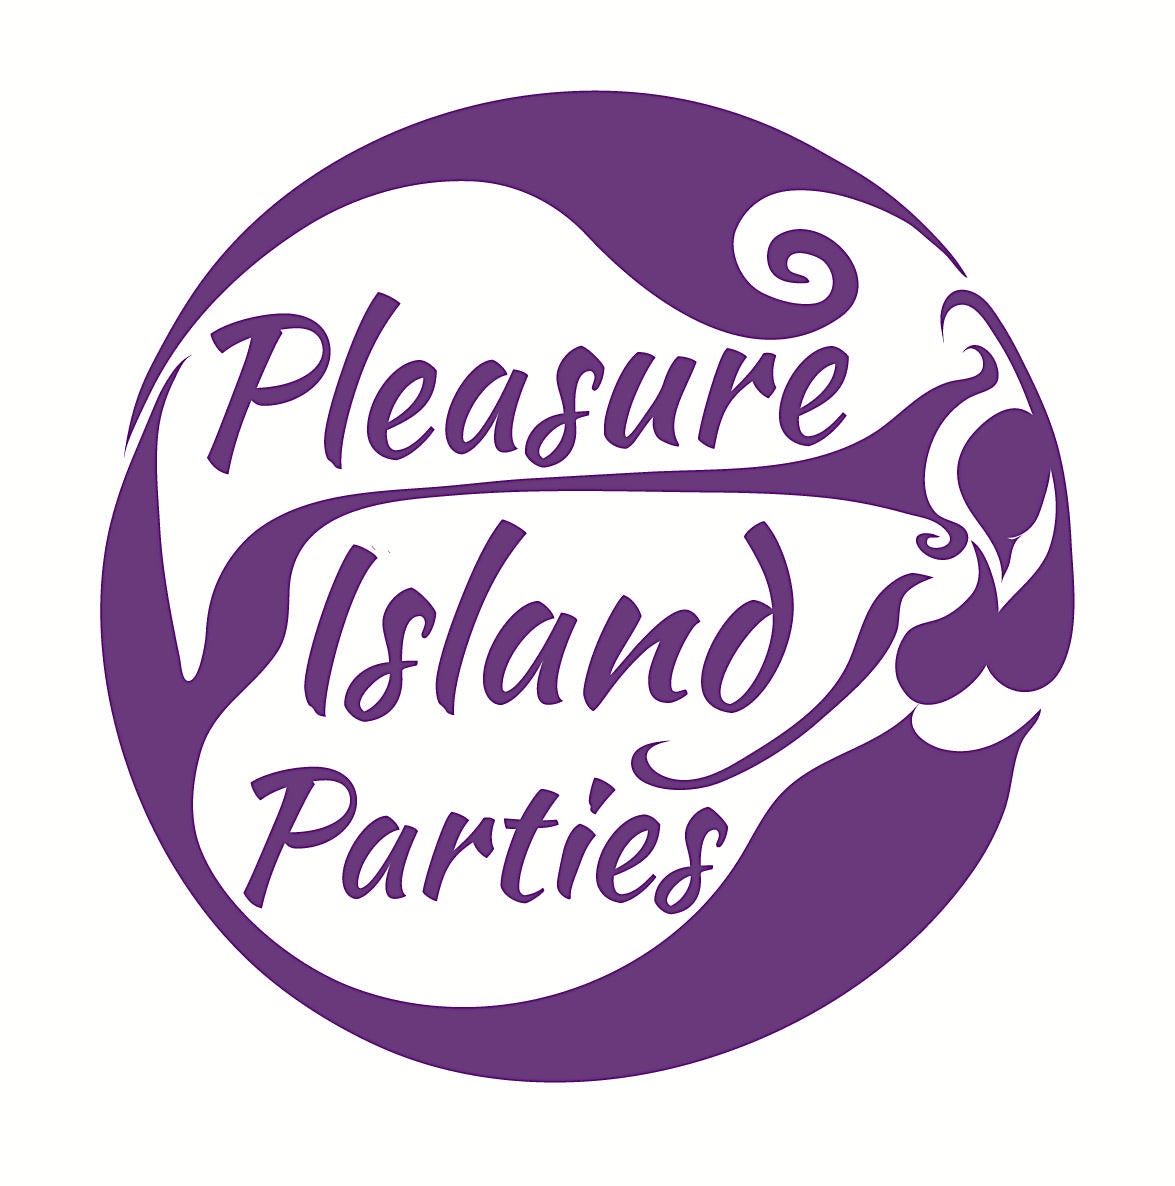 Pleasure Island Friday 13th Sep  2023 - Bristol